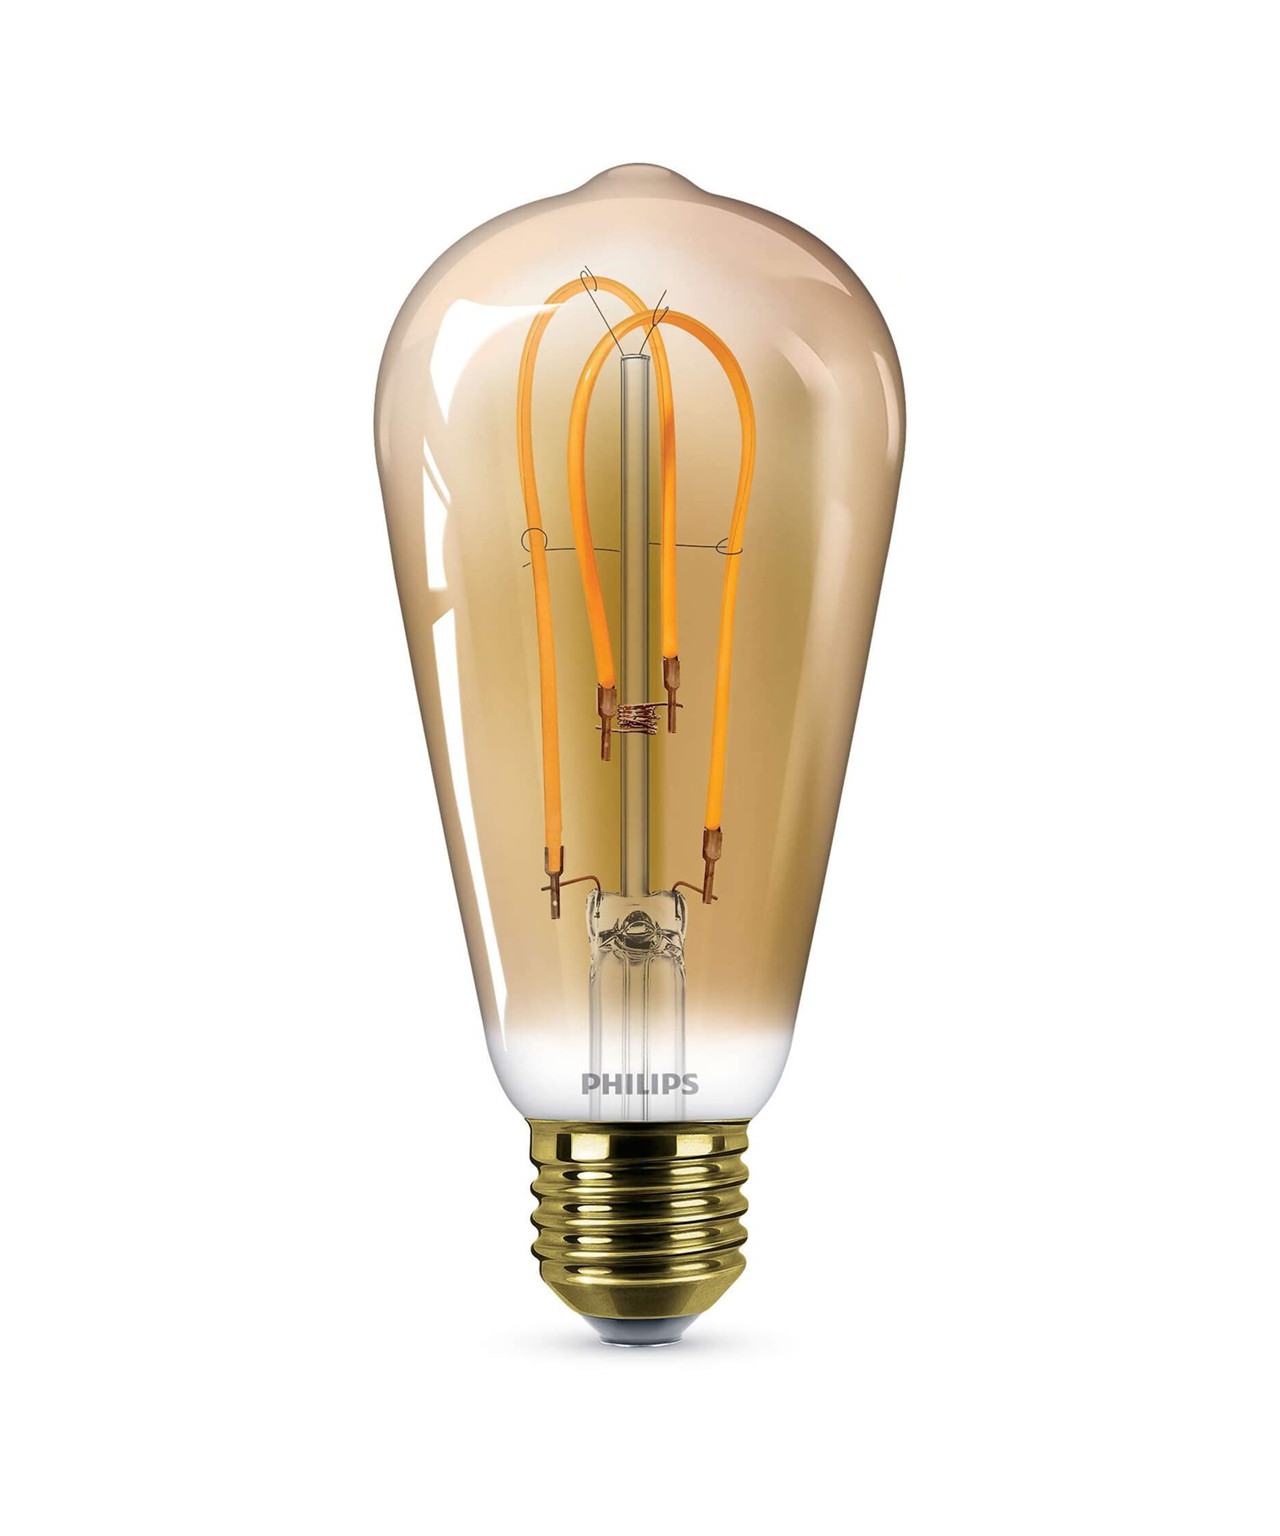 Philips – Päronlampa LED 5W Flame (250lm) ST64 E27